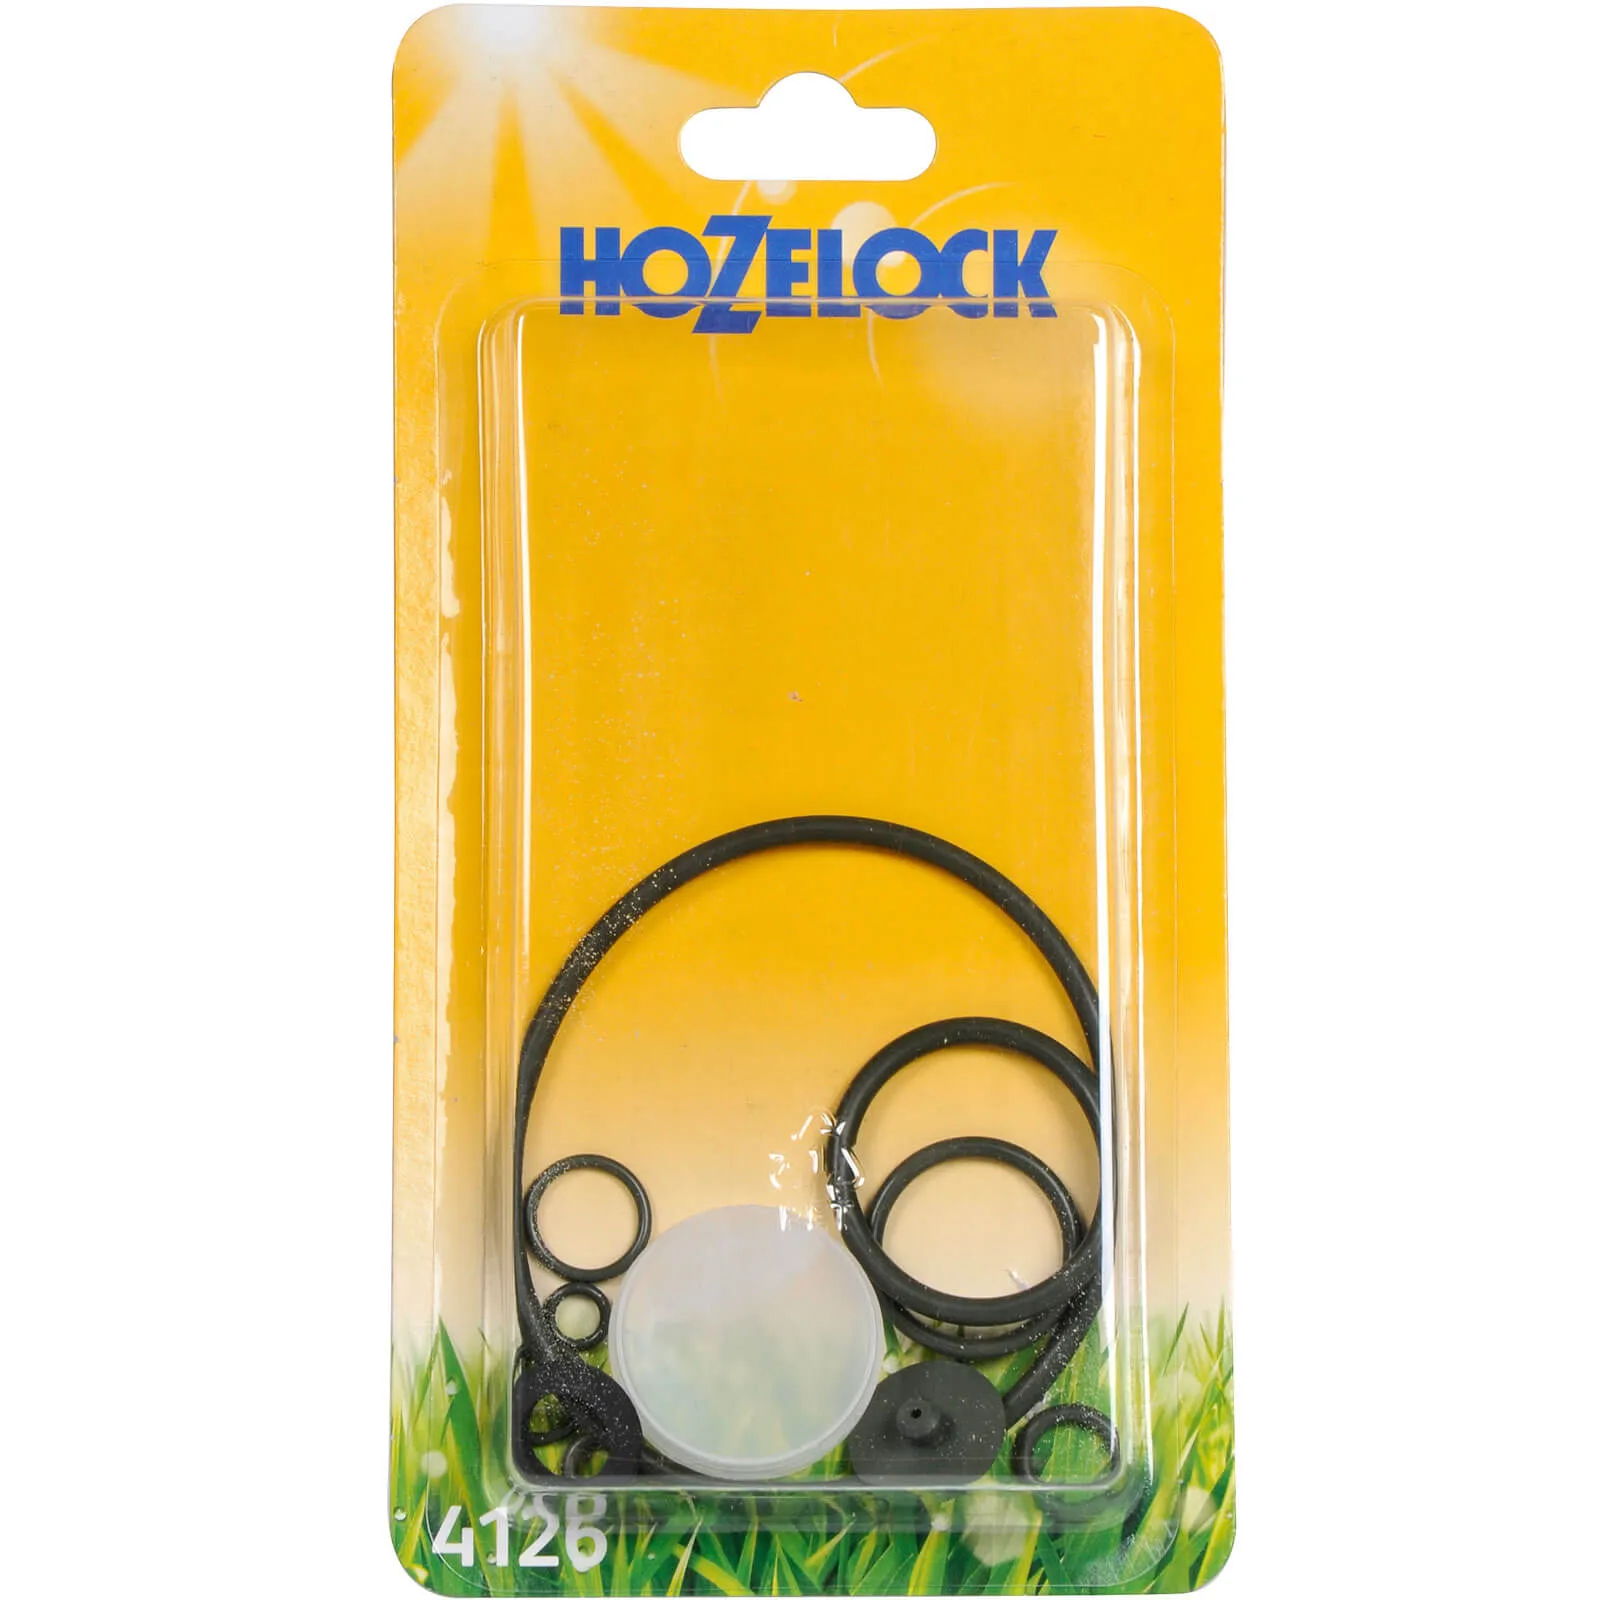 Hozelock Annual Service Kit for Pro and Viton Pressure Sprayers